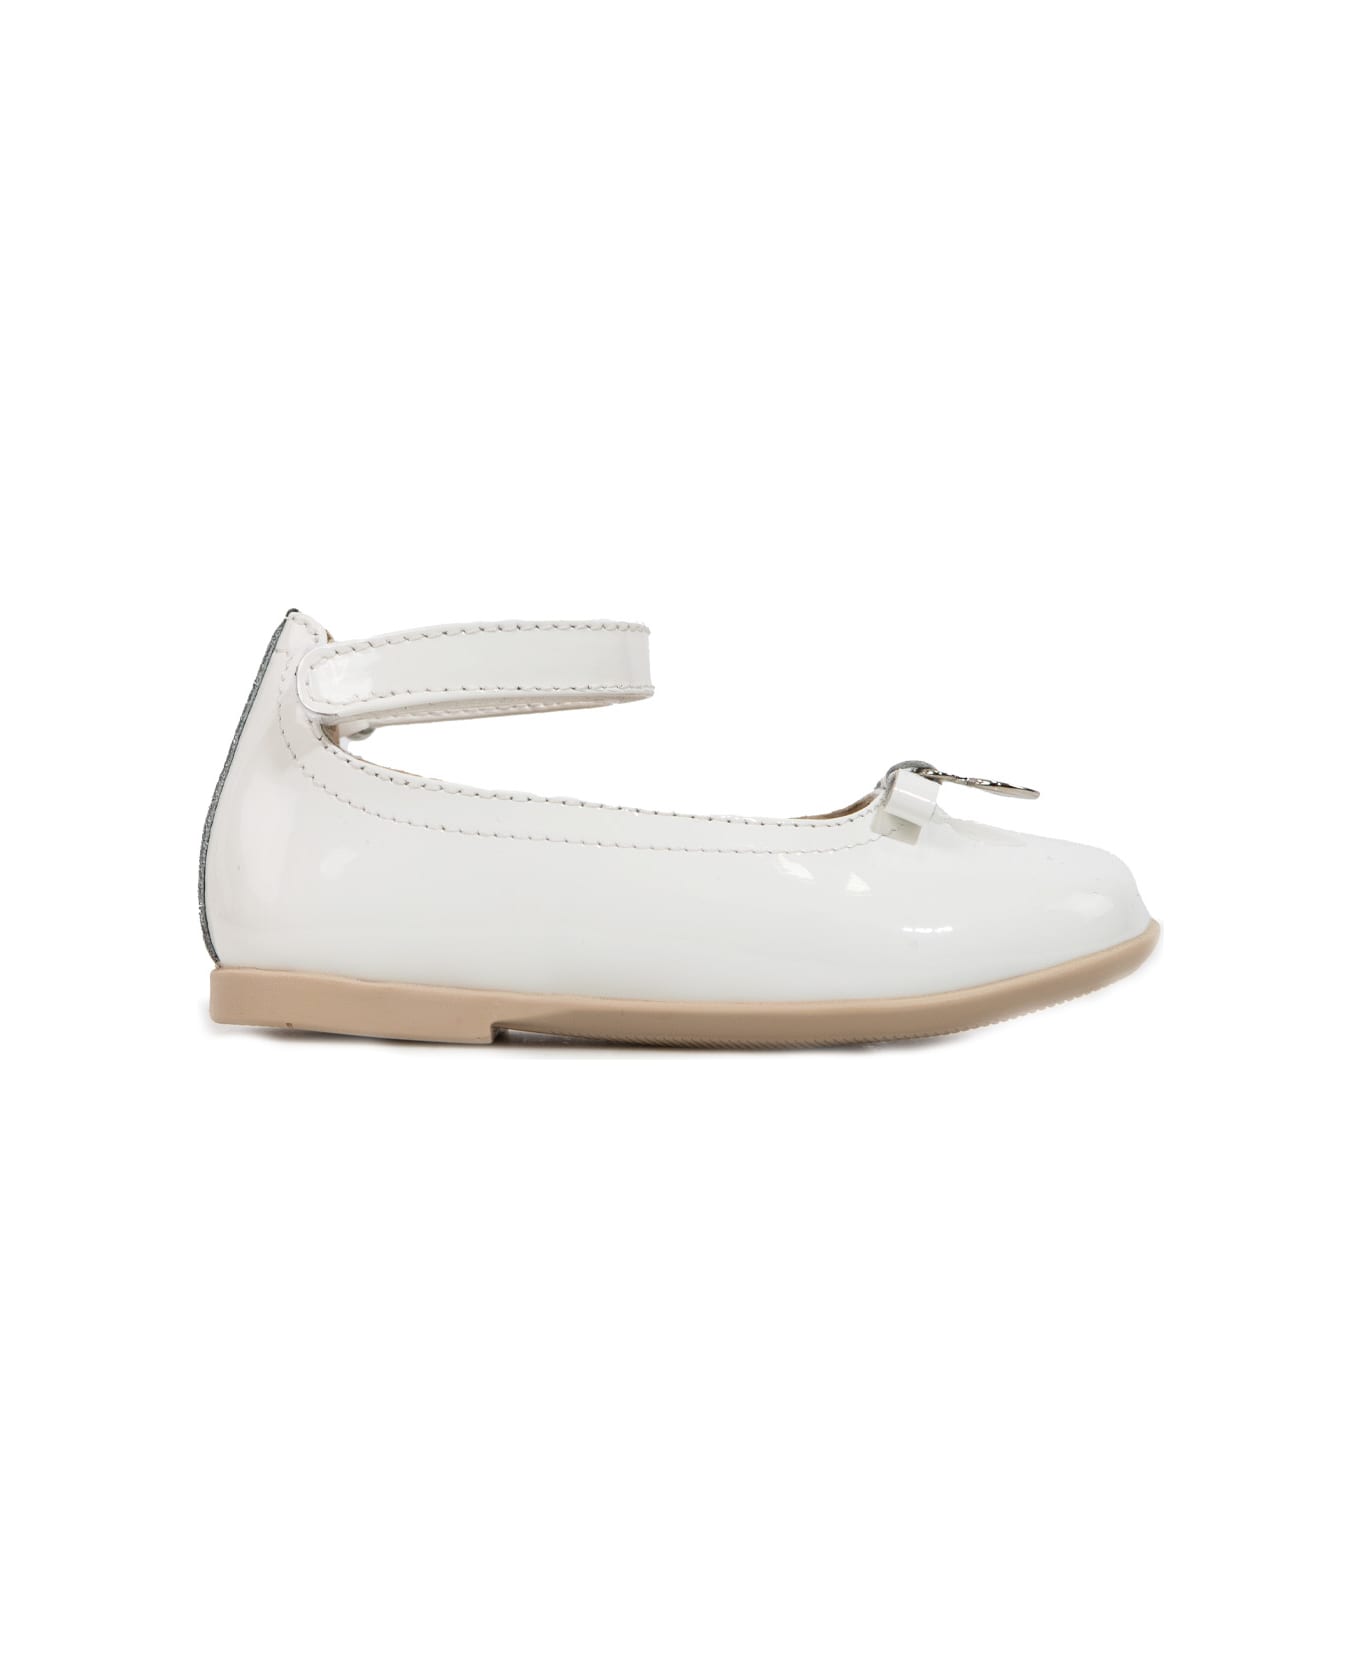 Emporio Armani Leather Shoes - White